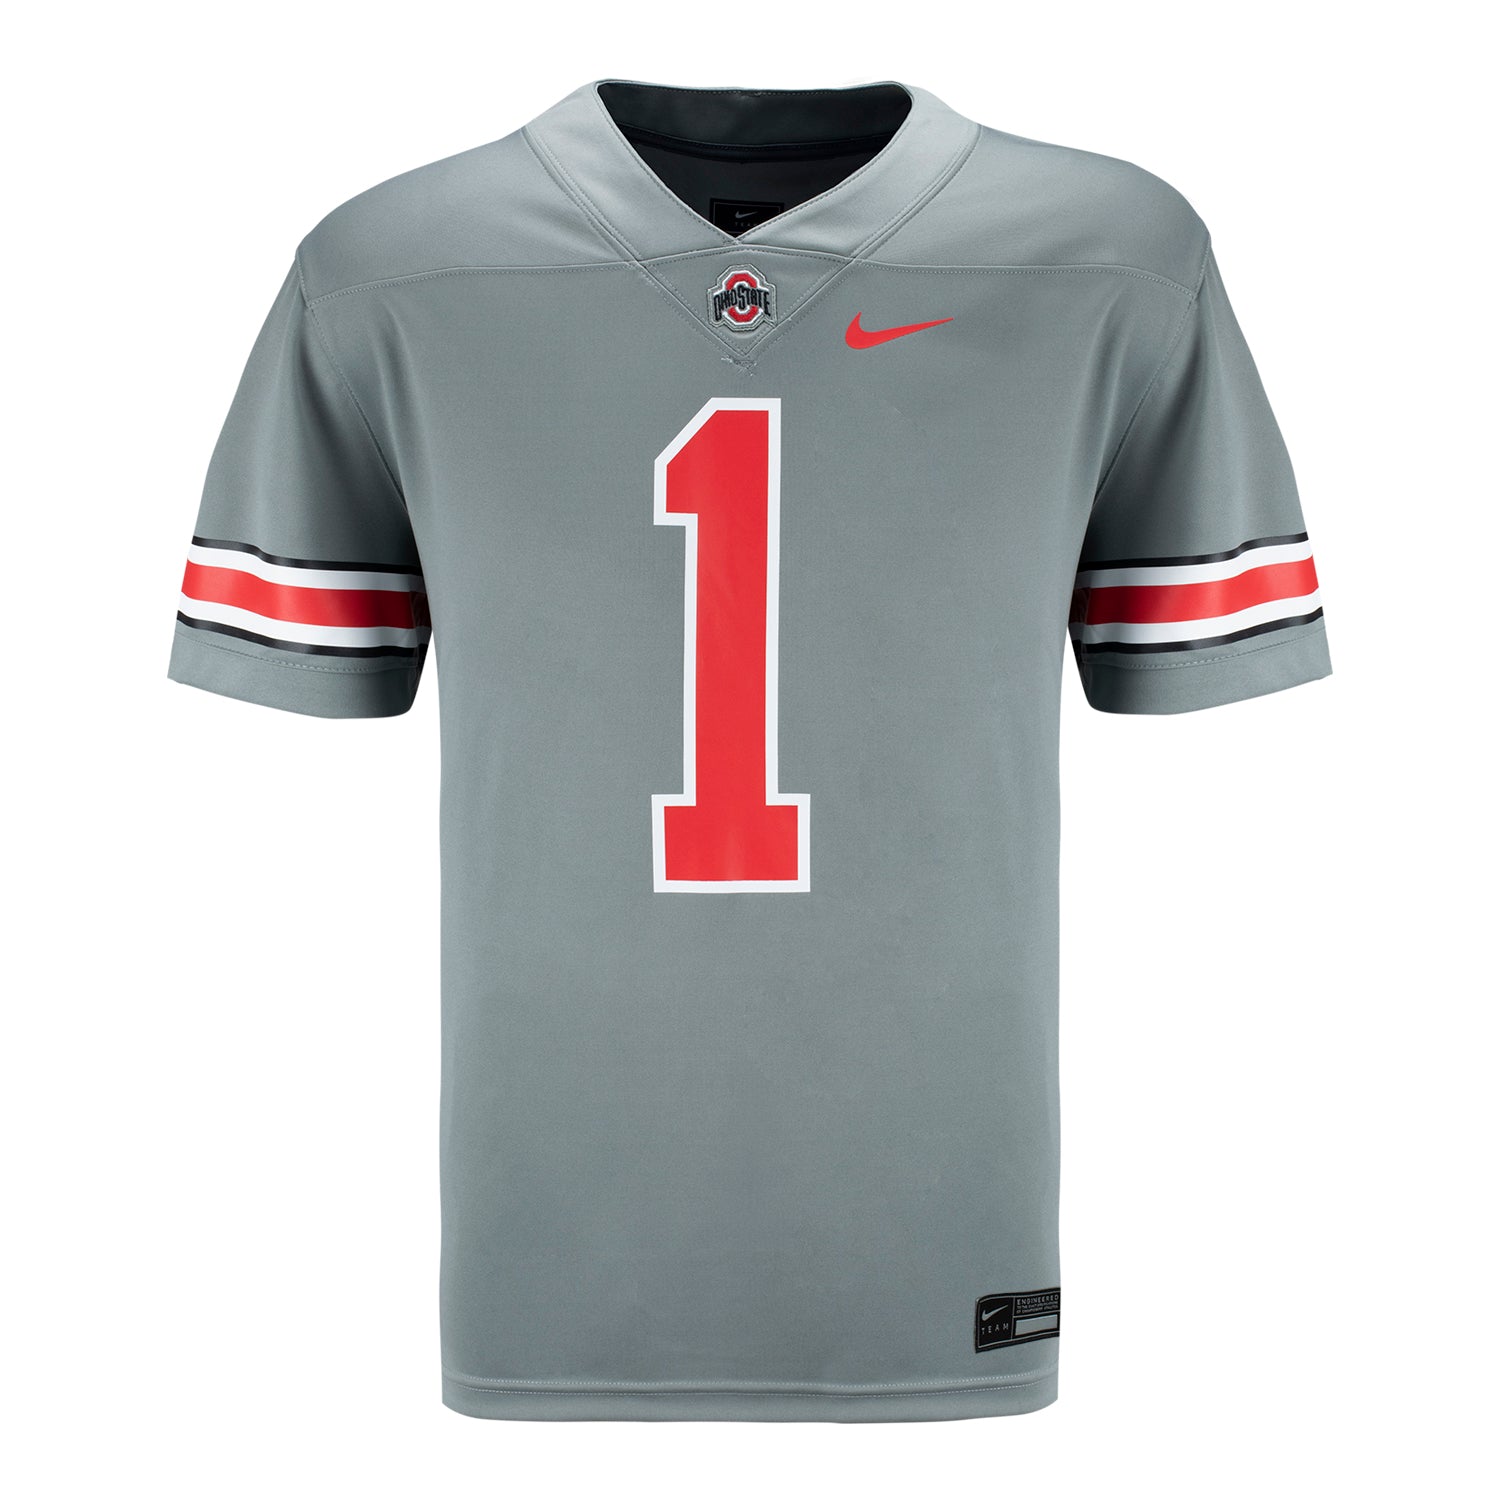 Ohio State Buckeyes Nike #1 Dark Steel Alternate Jersey / Small